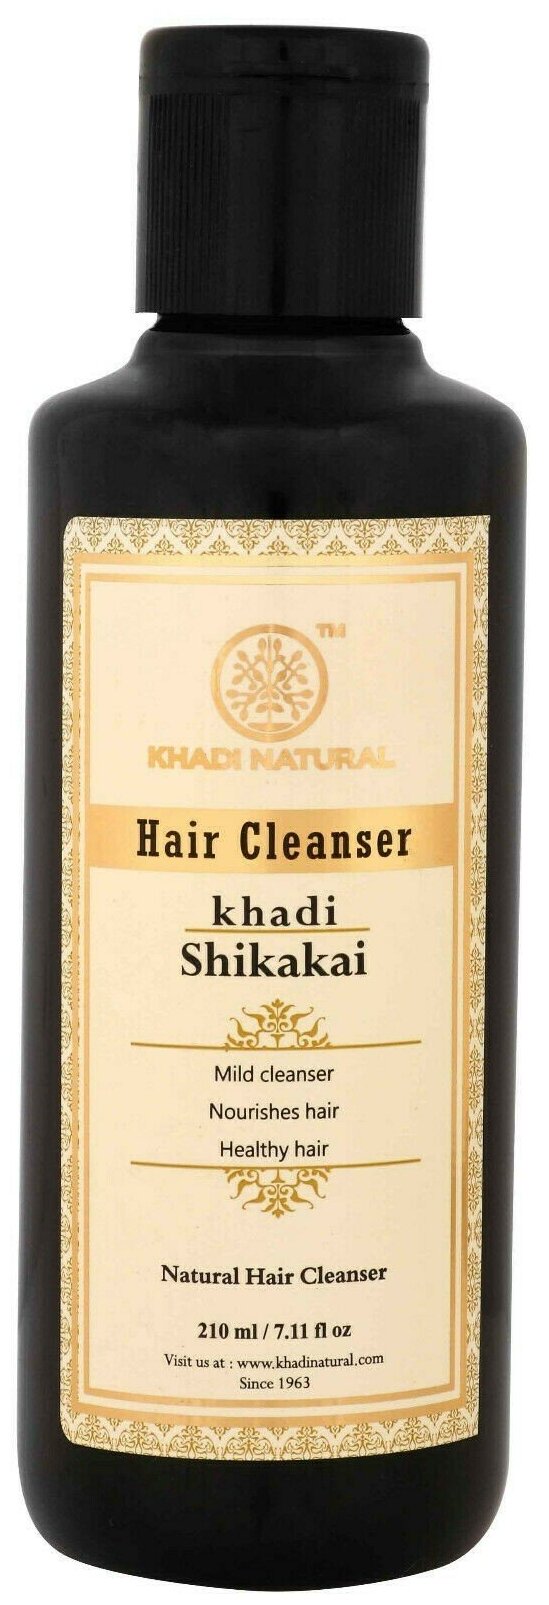 Khadi Natural шампунь Shikakai Hair Cleanser Шикакай, 210 мл